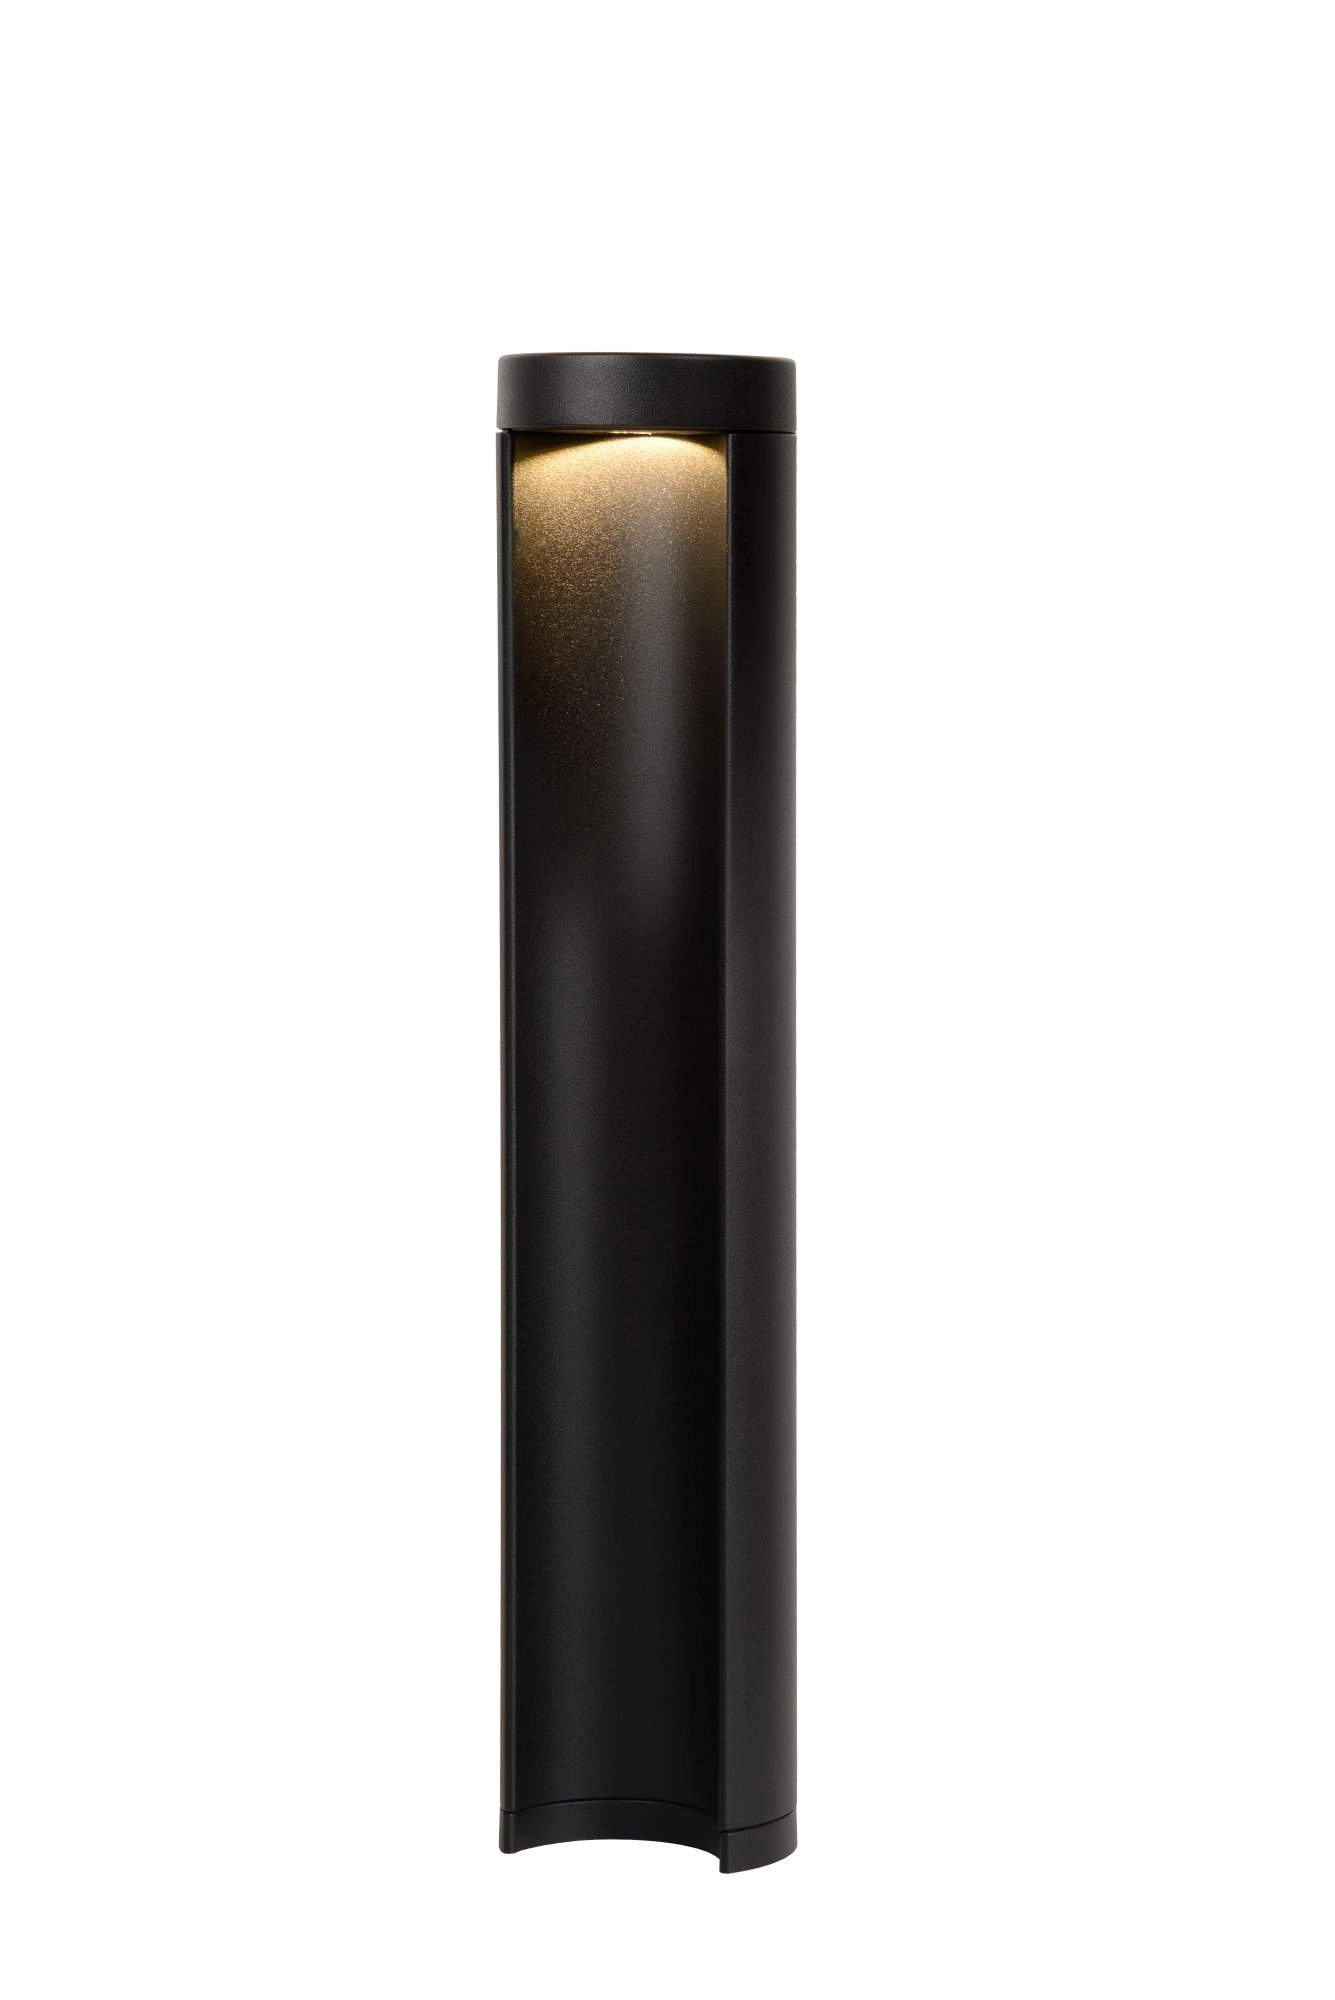 LU 27874/45/30 Lucide COMBO - Bollard light Outdoor - Ø 9 cm - LED - 1x9W 3000K - IP54 - Black